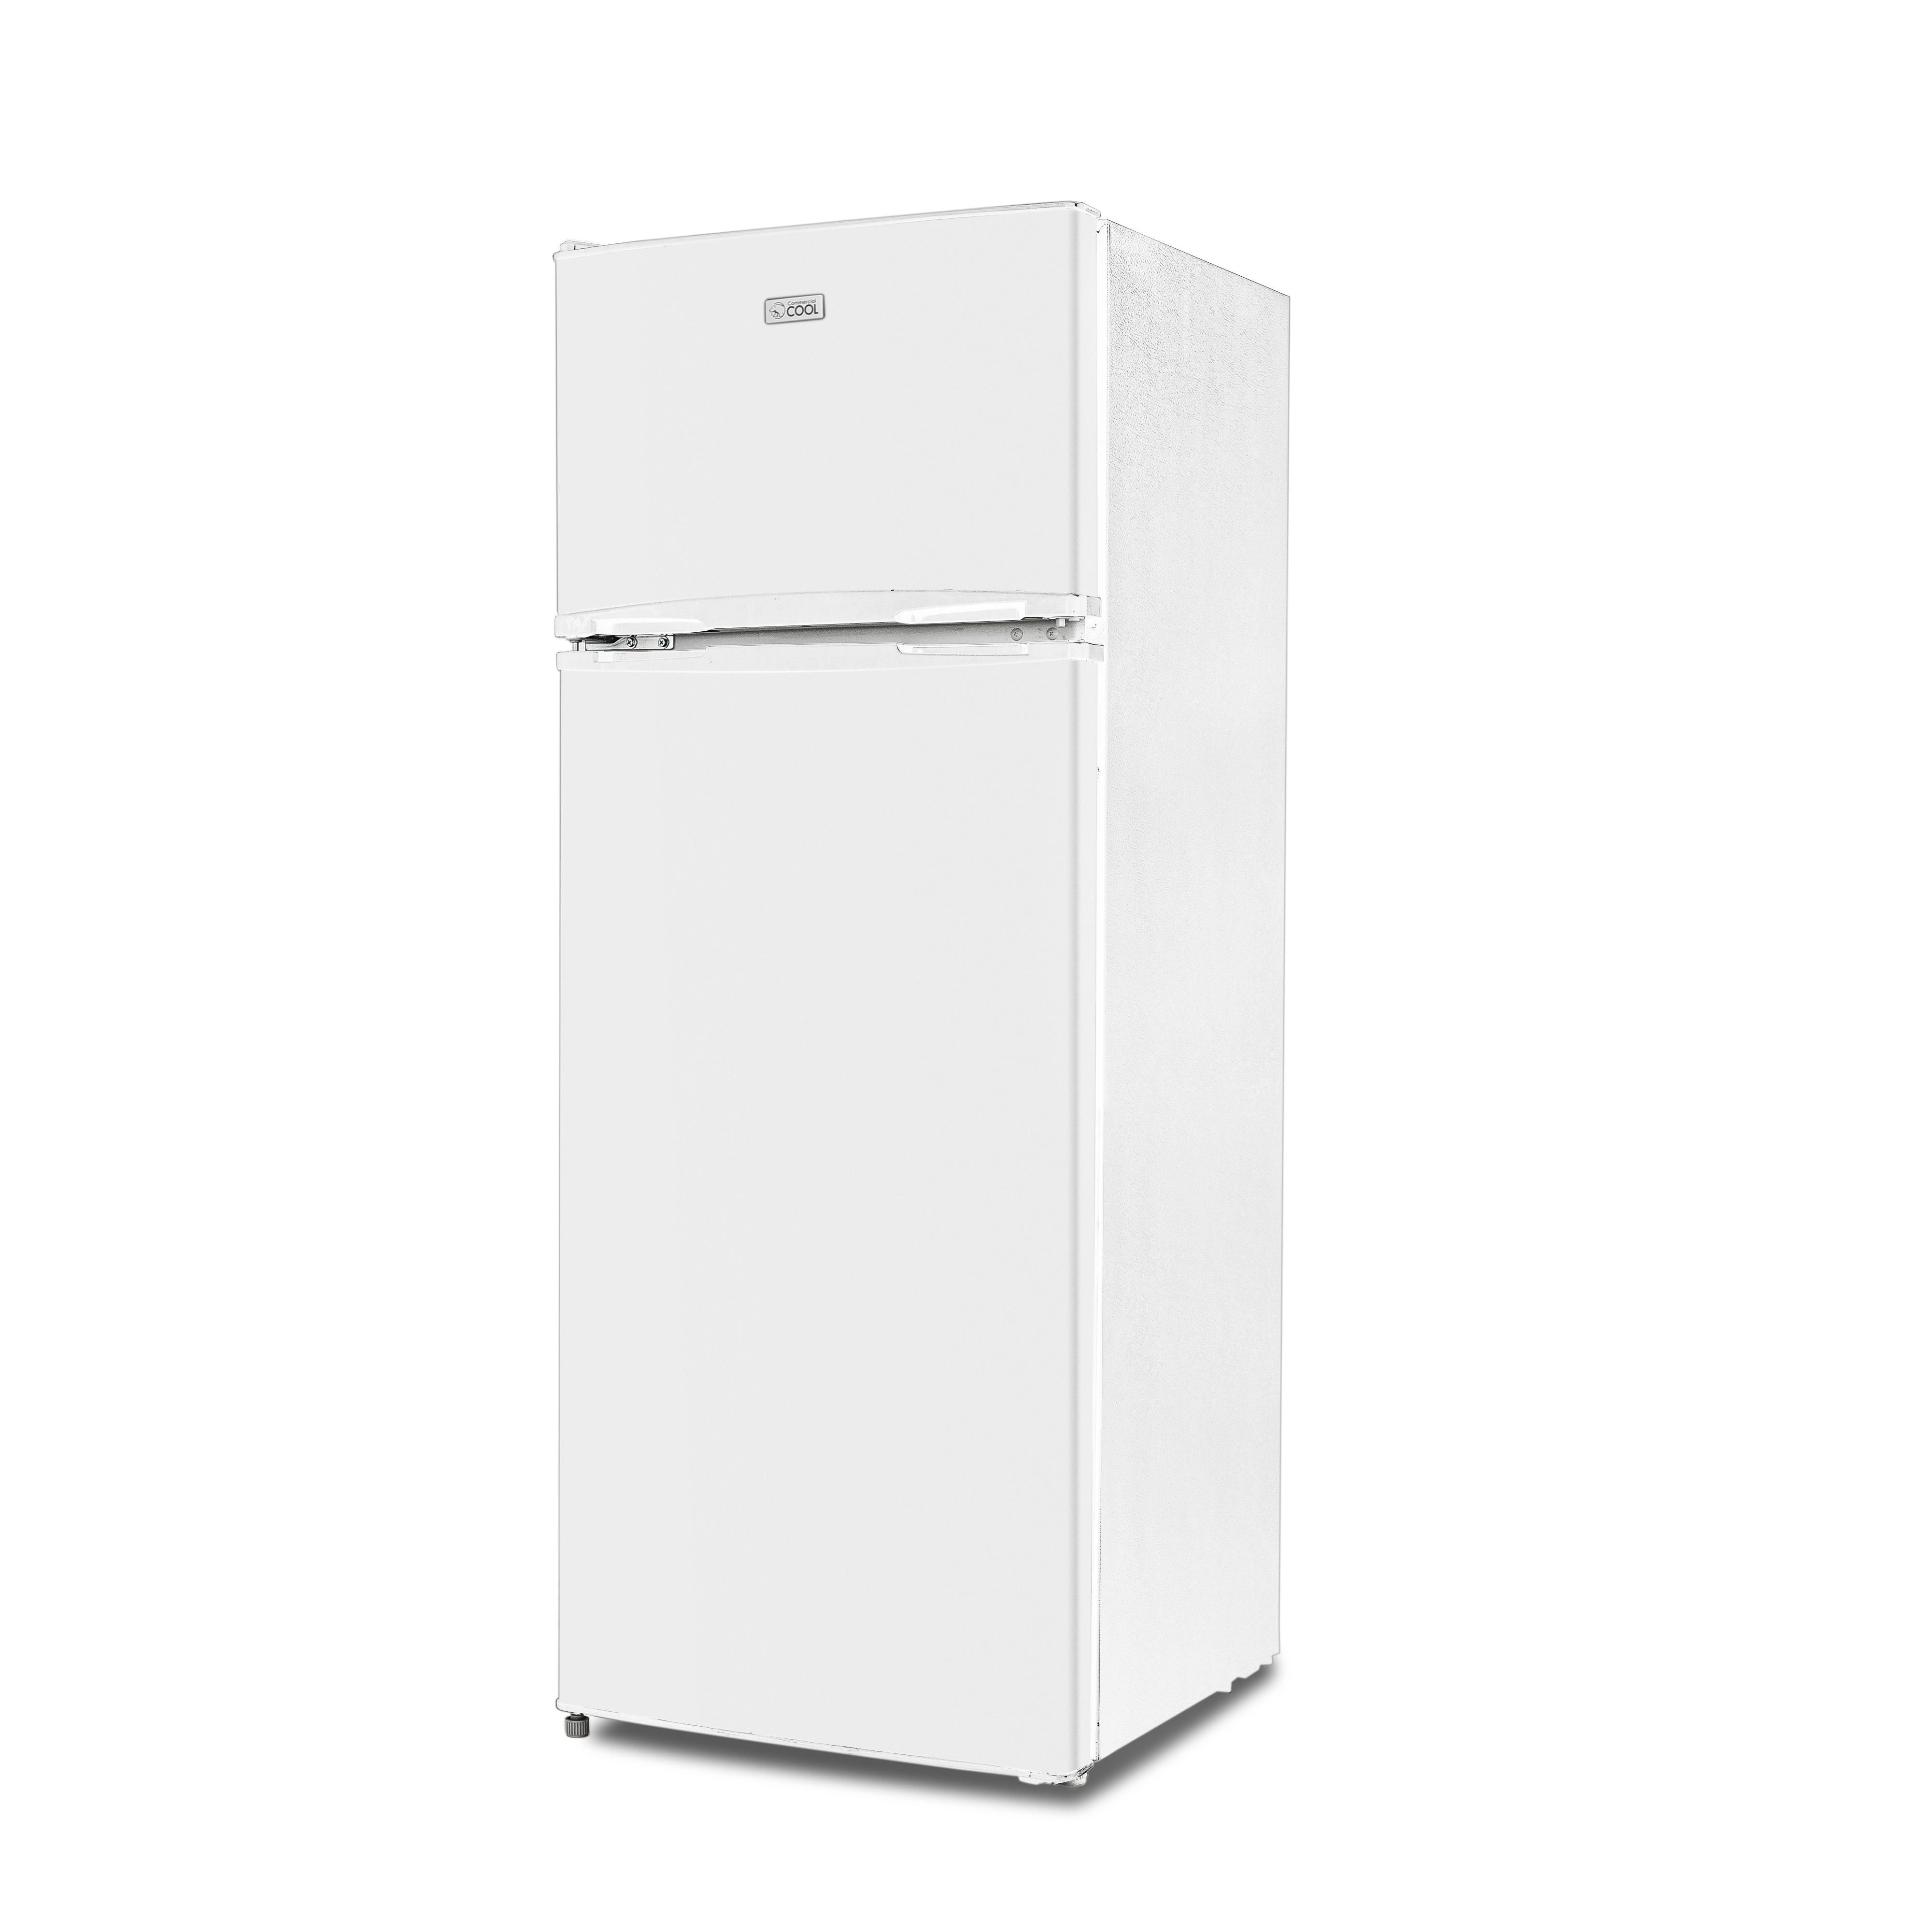 Fingerhut - Commercial Cool 7.7 Cu. Ft. Refrigerator with Freezer